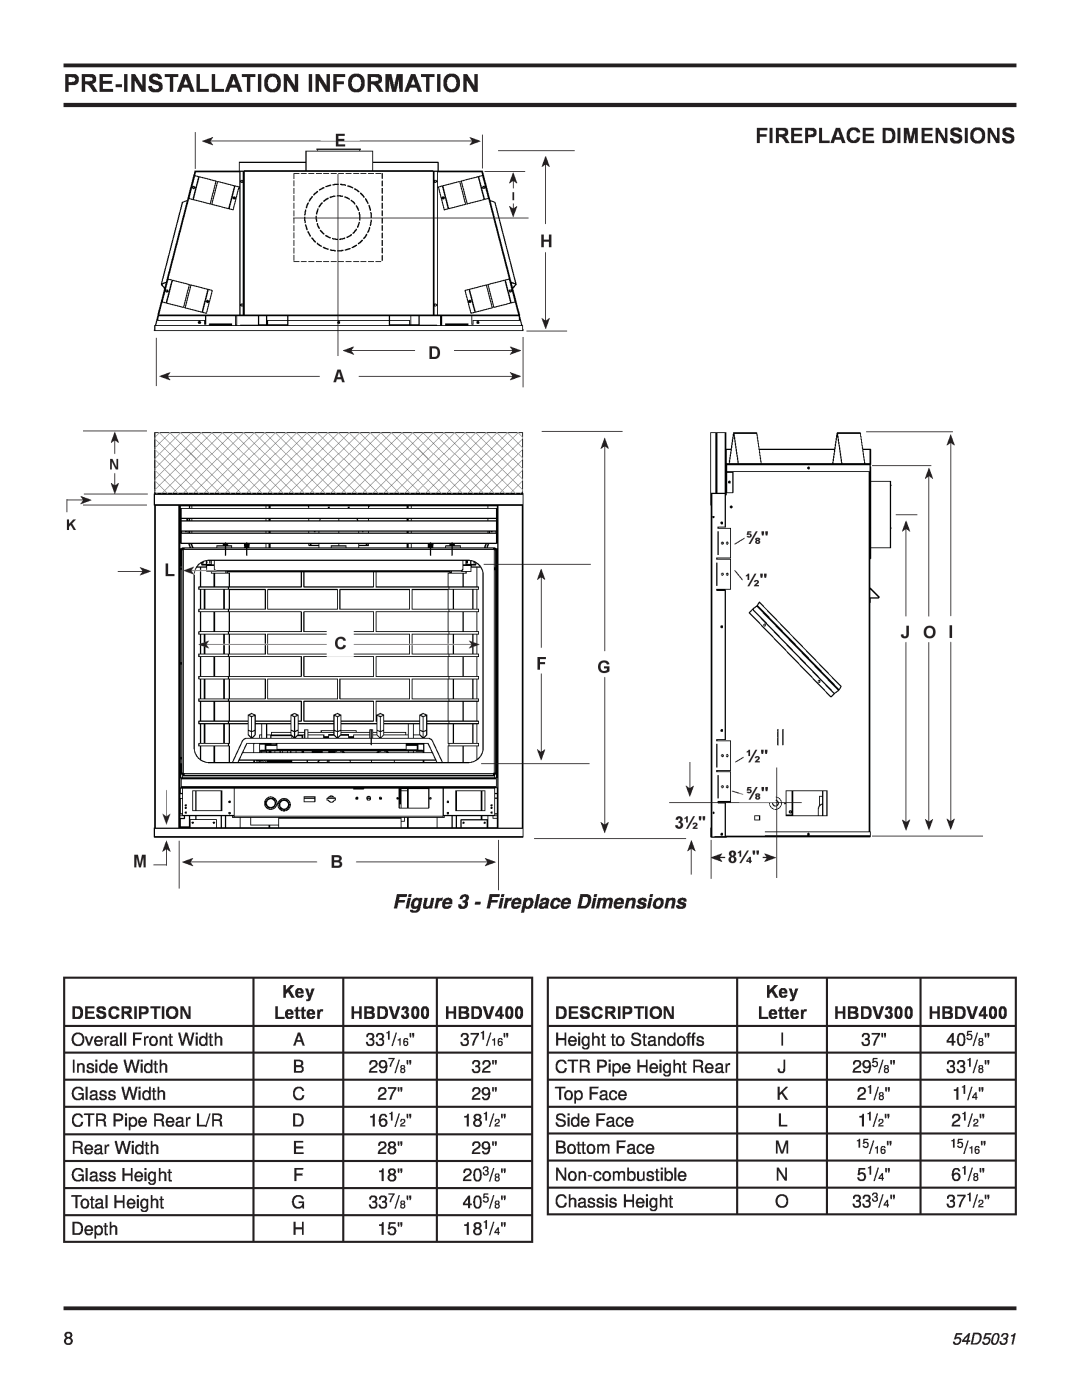 Monessen Hearth HBDV400 Pre-Installationinformation, Fireplace Dimensions, ⅝ ½ C J O F G ½⅝, Description, Letter, HBDV300 